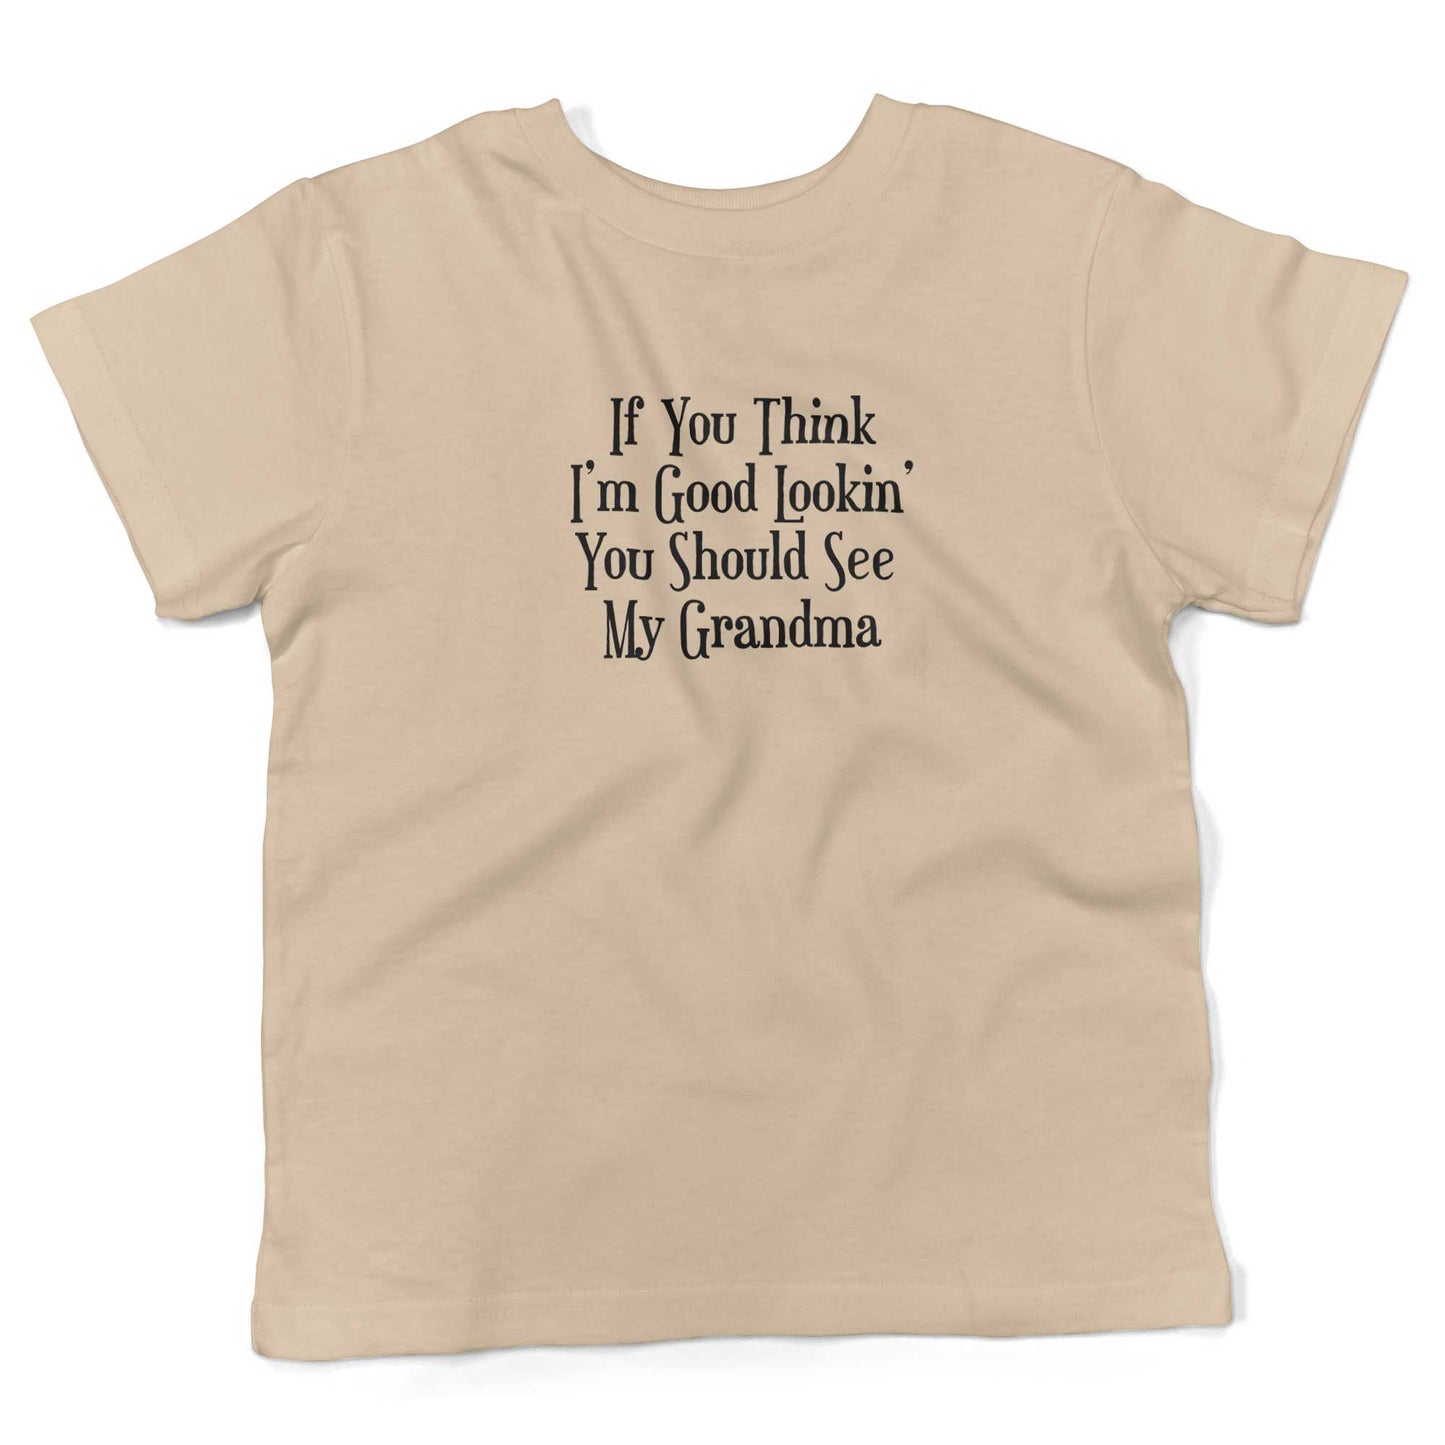 If You Think I'm Good Lookin', You Should See My Grandma Toddler Shirt-Organic Natural-2T